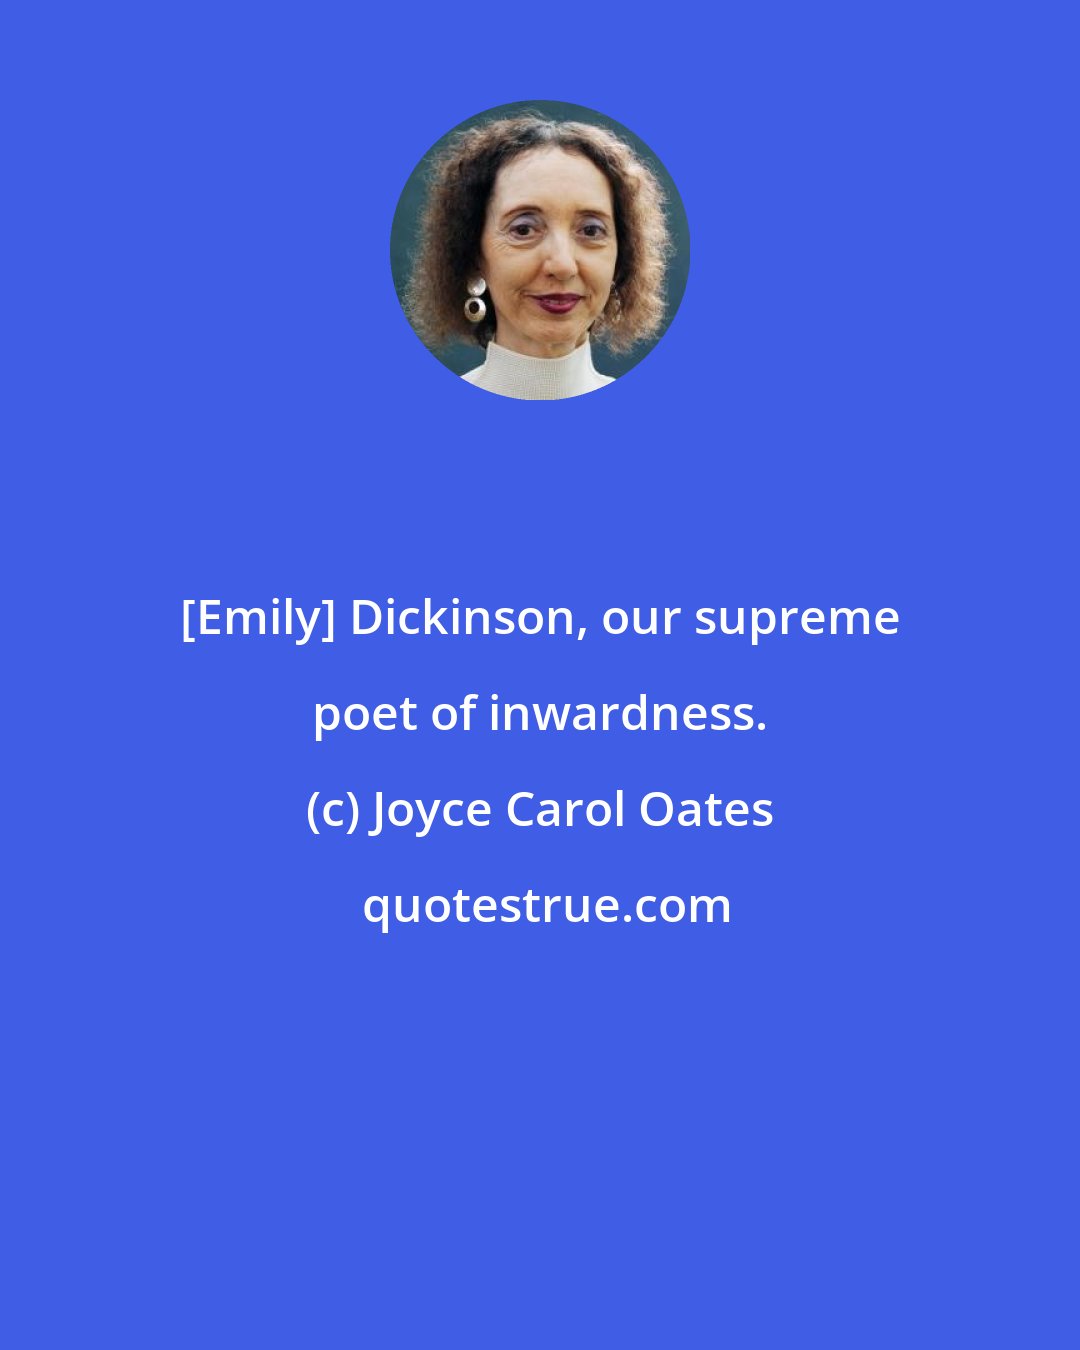 Joyce Carol Oates: [Emily] Dickinson, our supreme poet of inwardness.